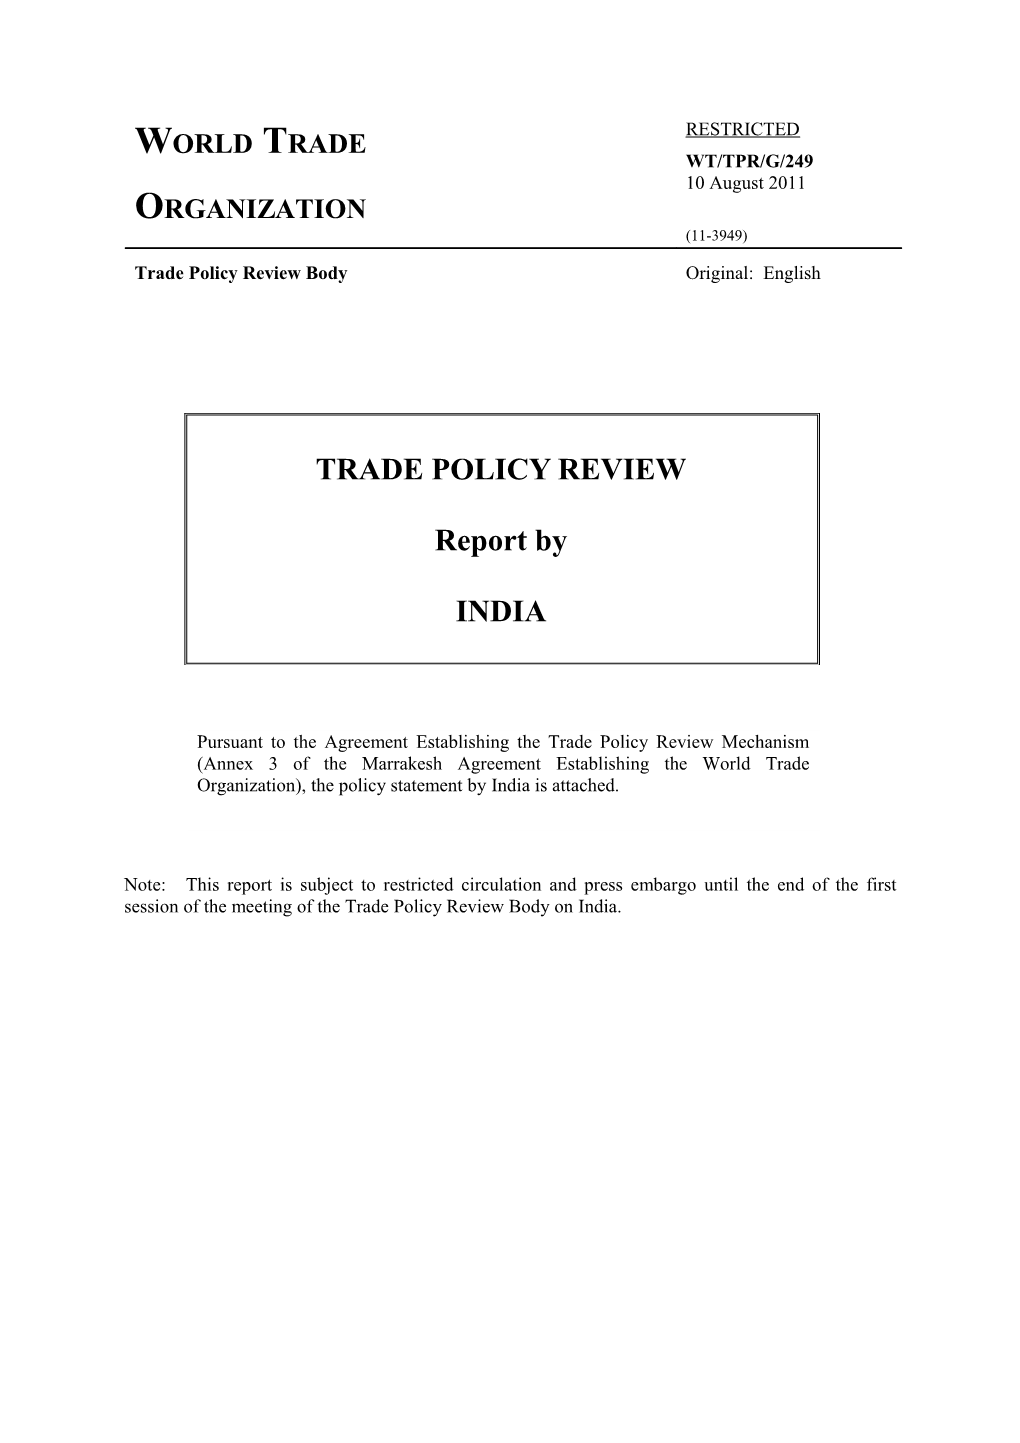 (3)Exports, Imports, and Trade Balance7